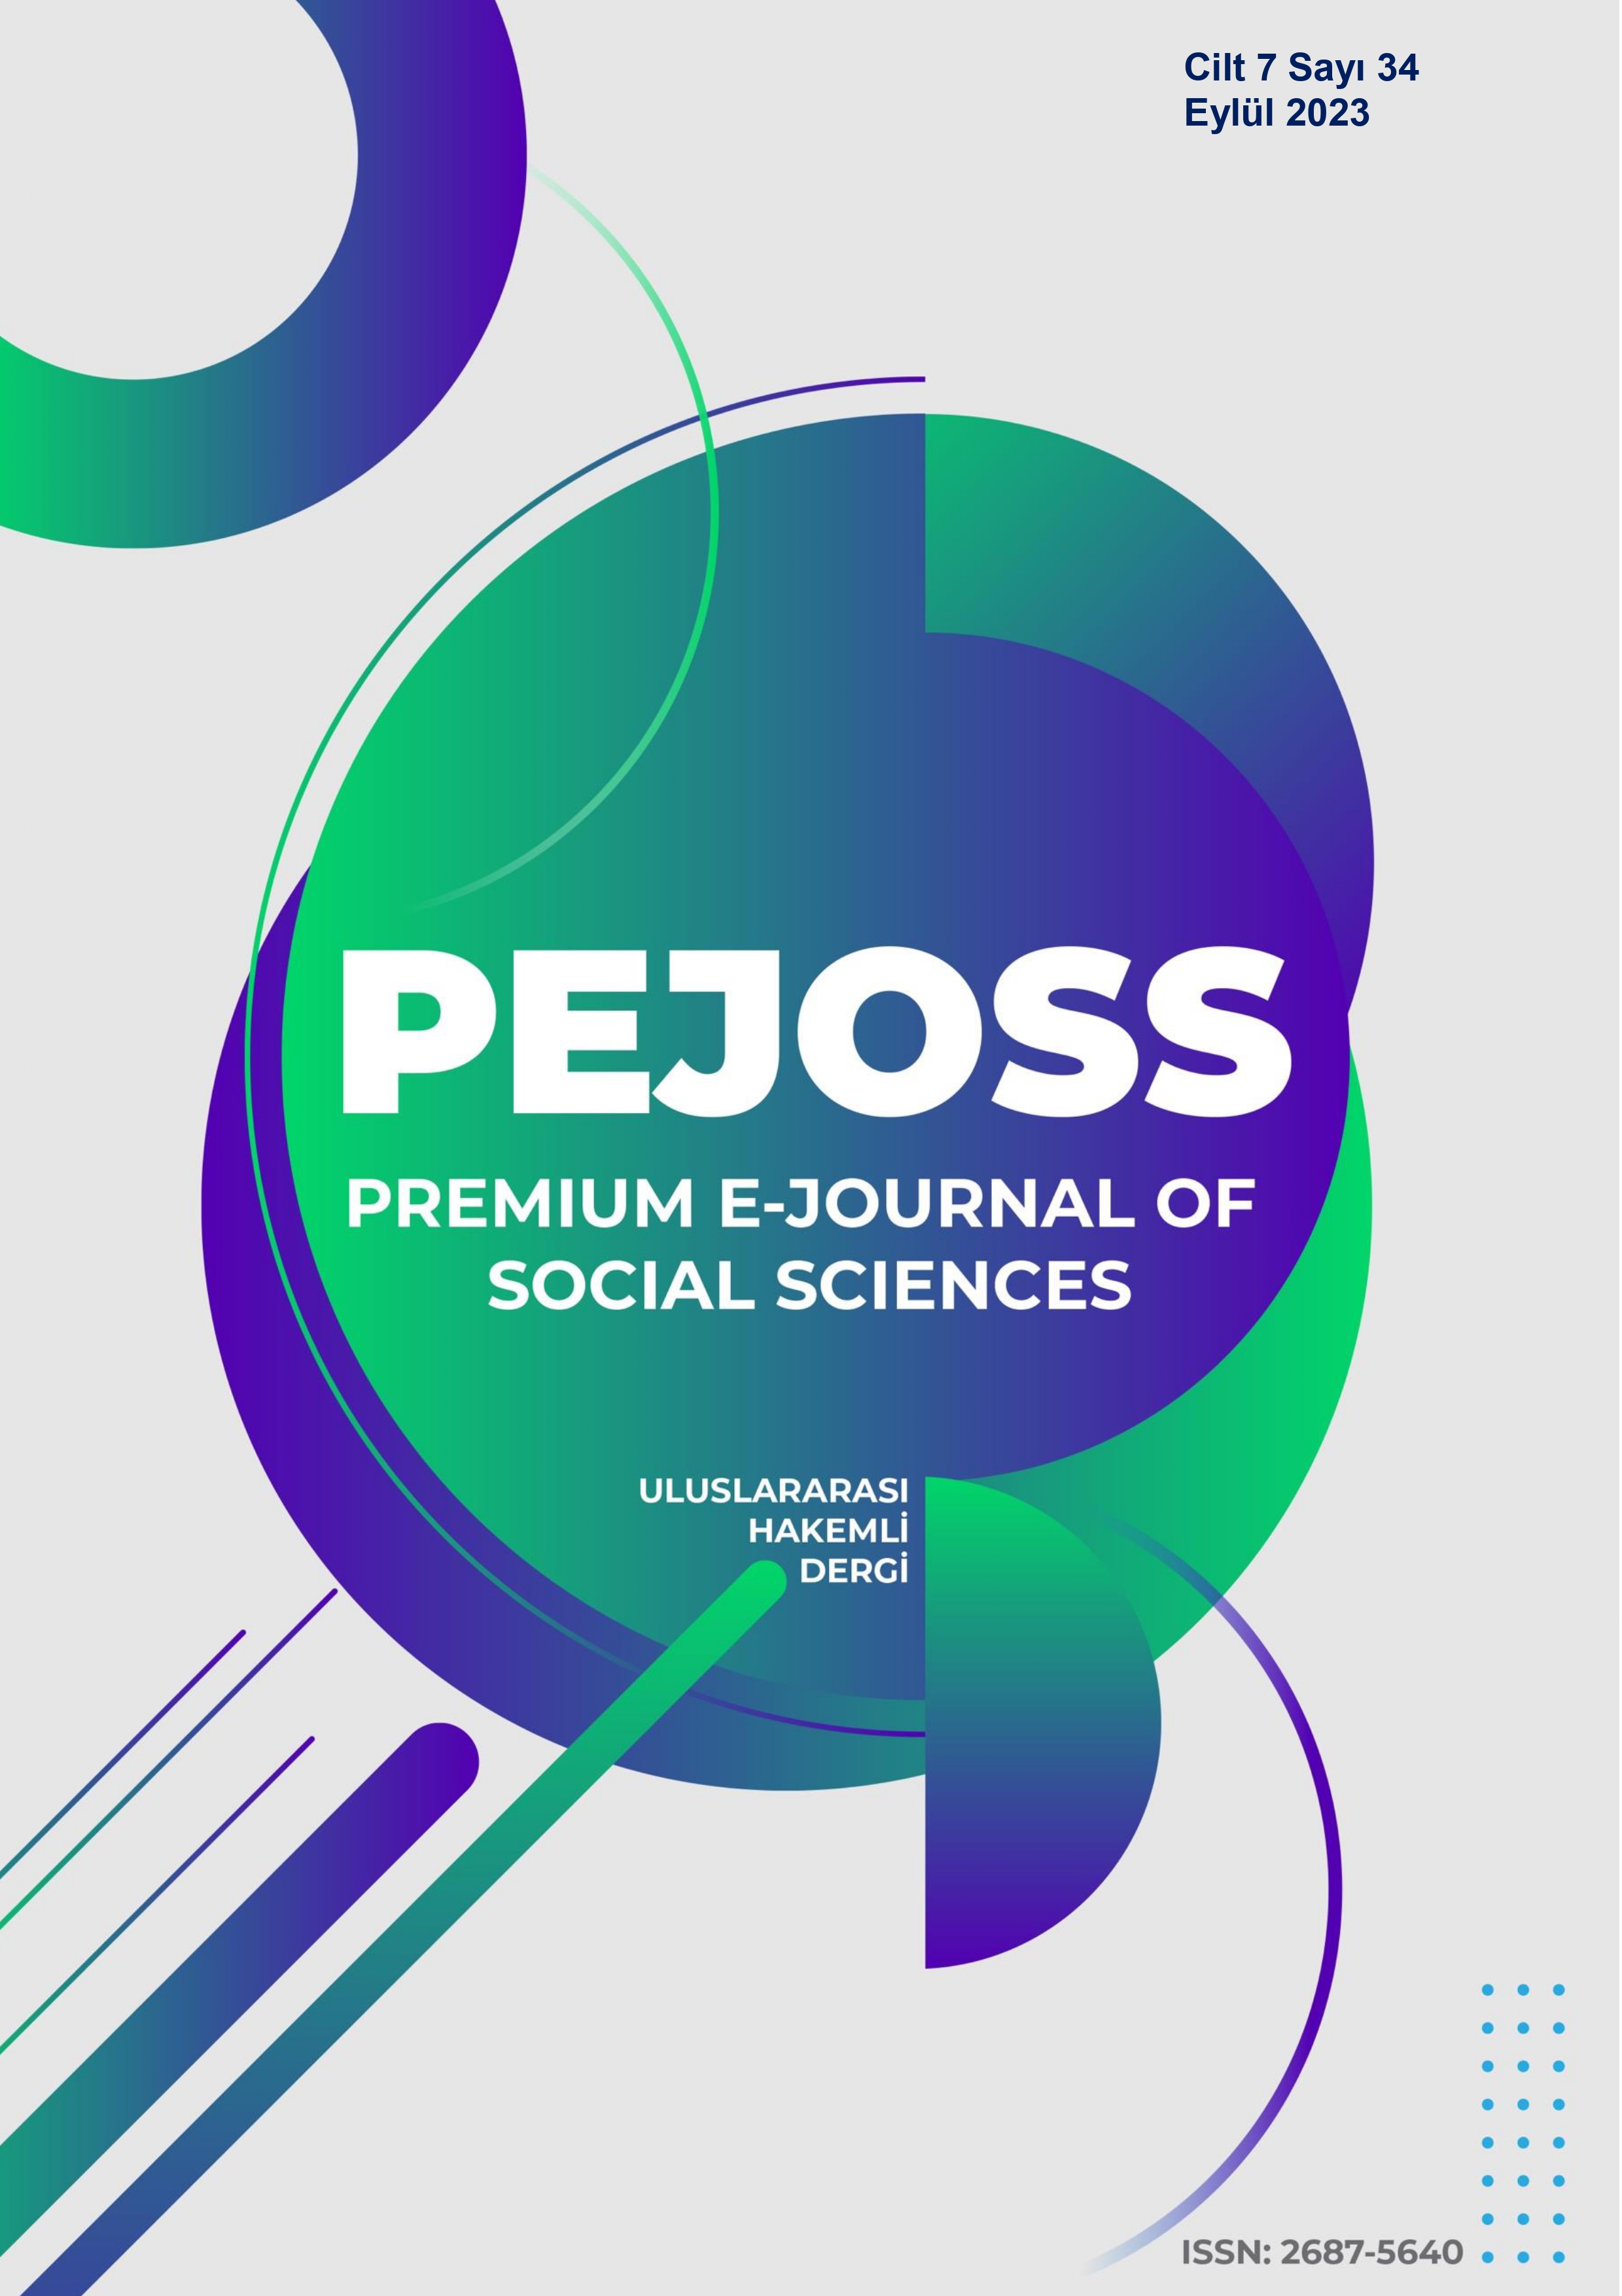 					Cilt 7 Sayı 34 (2023): Premium E-Journal of Social Sciences Gör
				